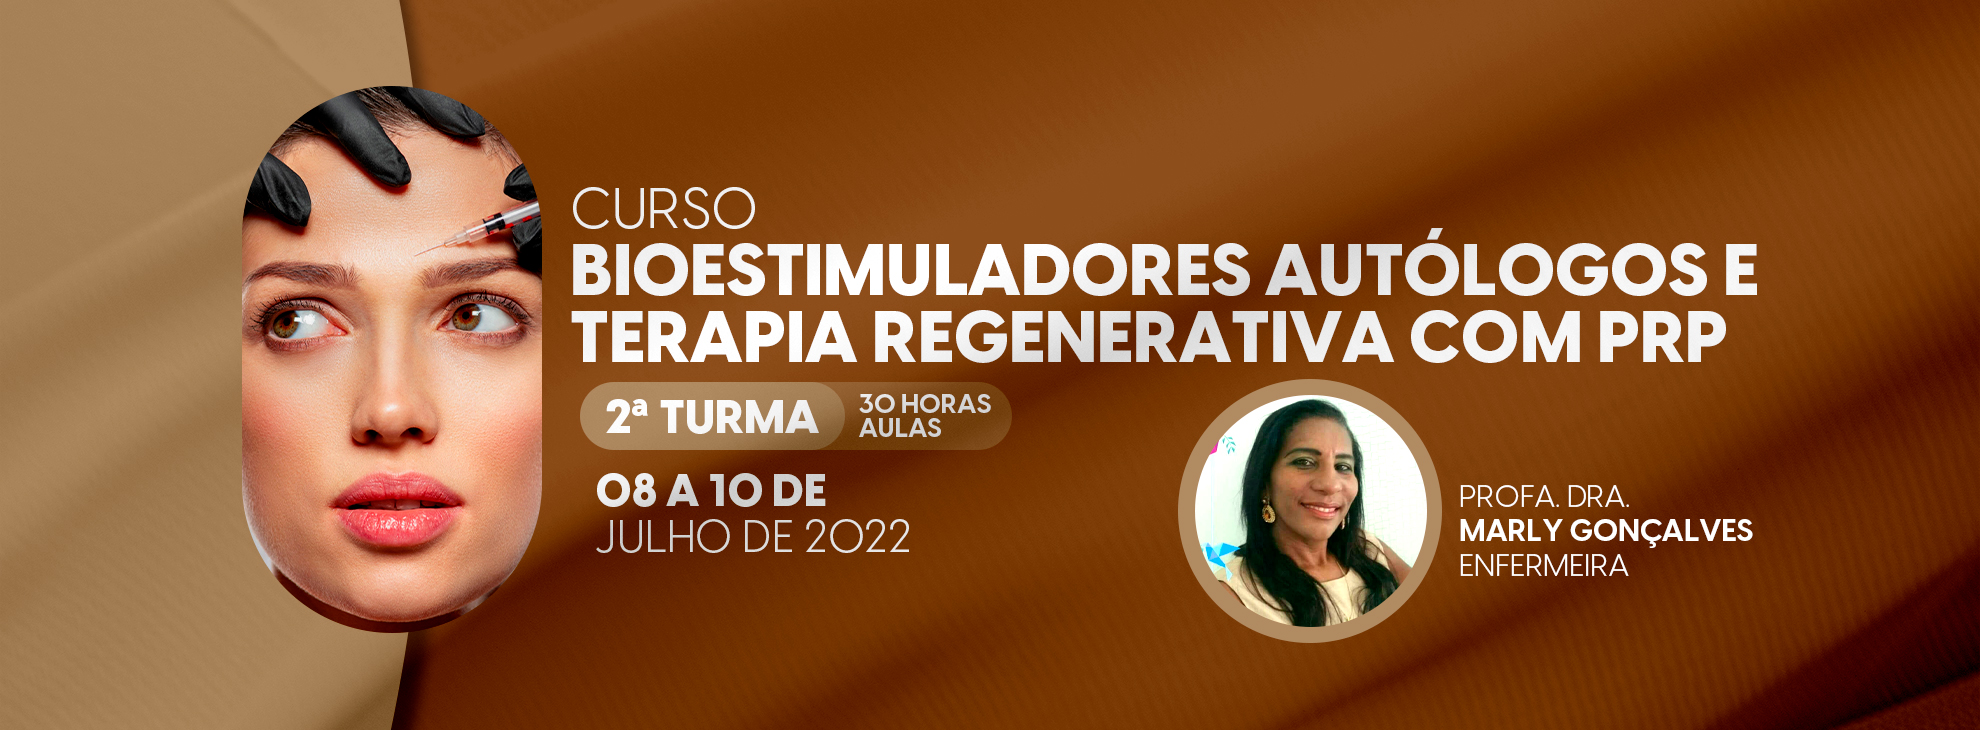 banner Bioestimuladores Autologos e Terapia Regenerativa com PRP